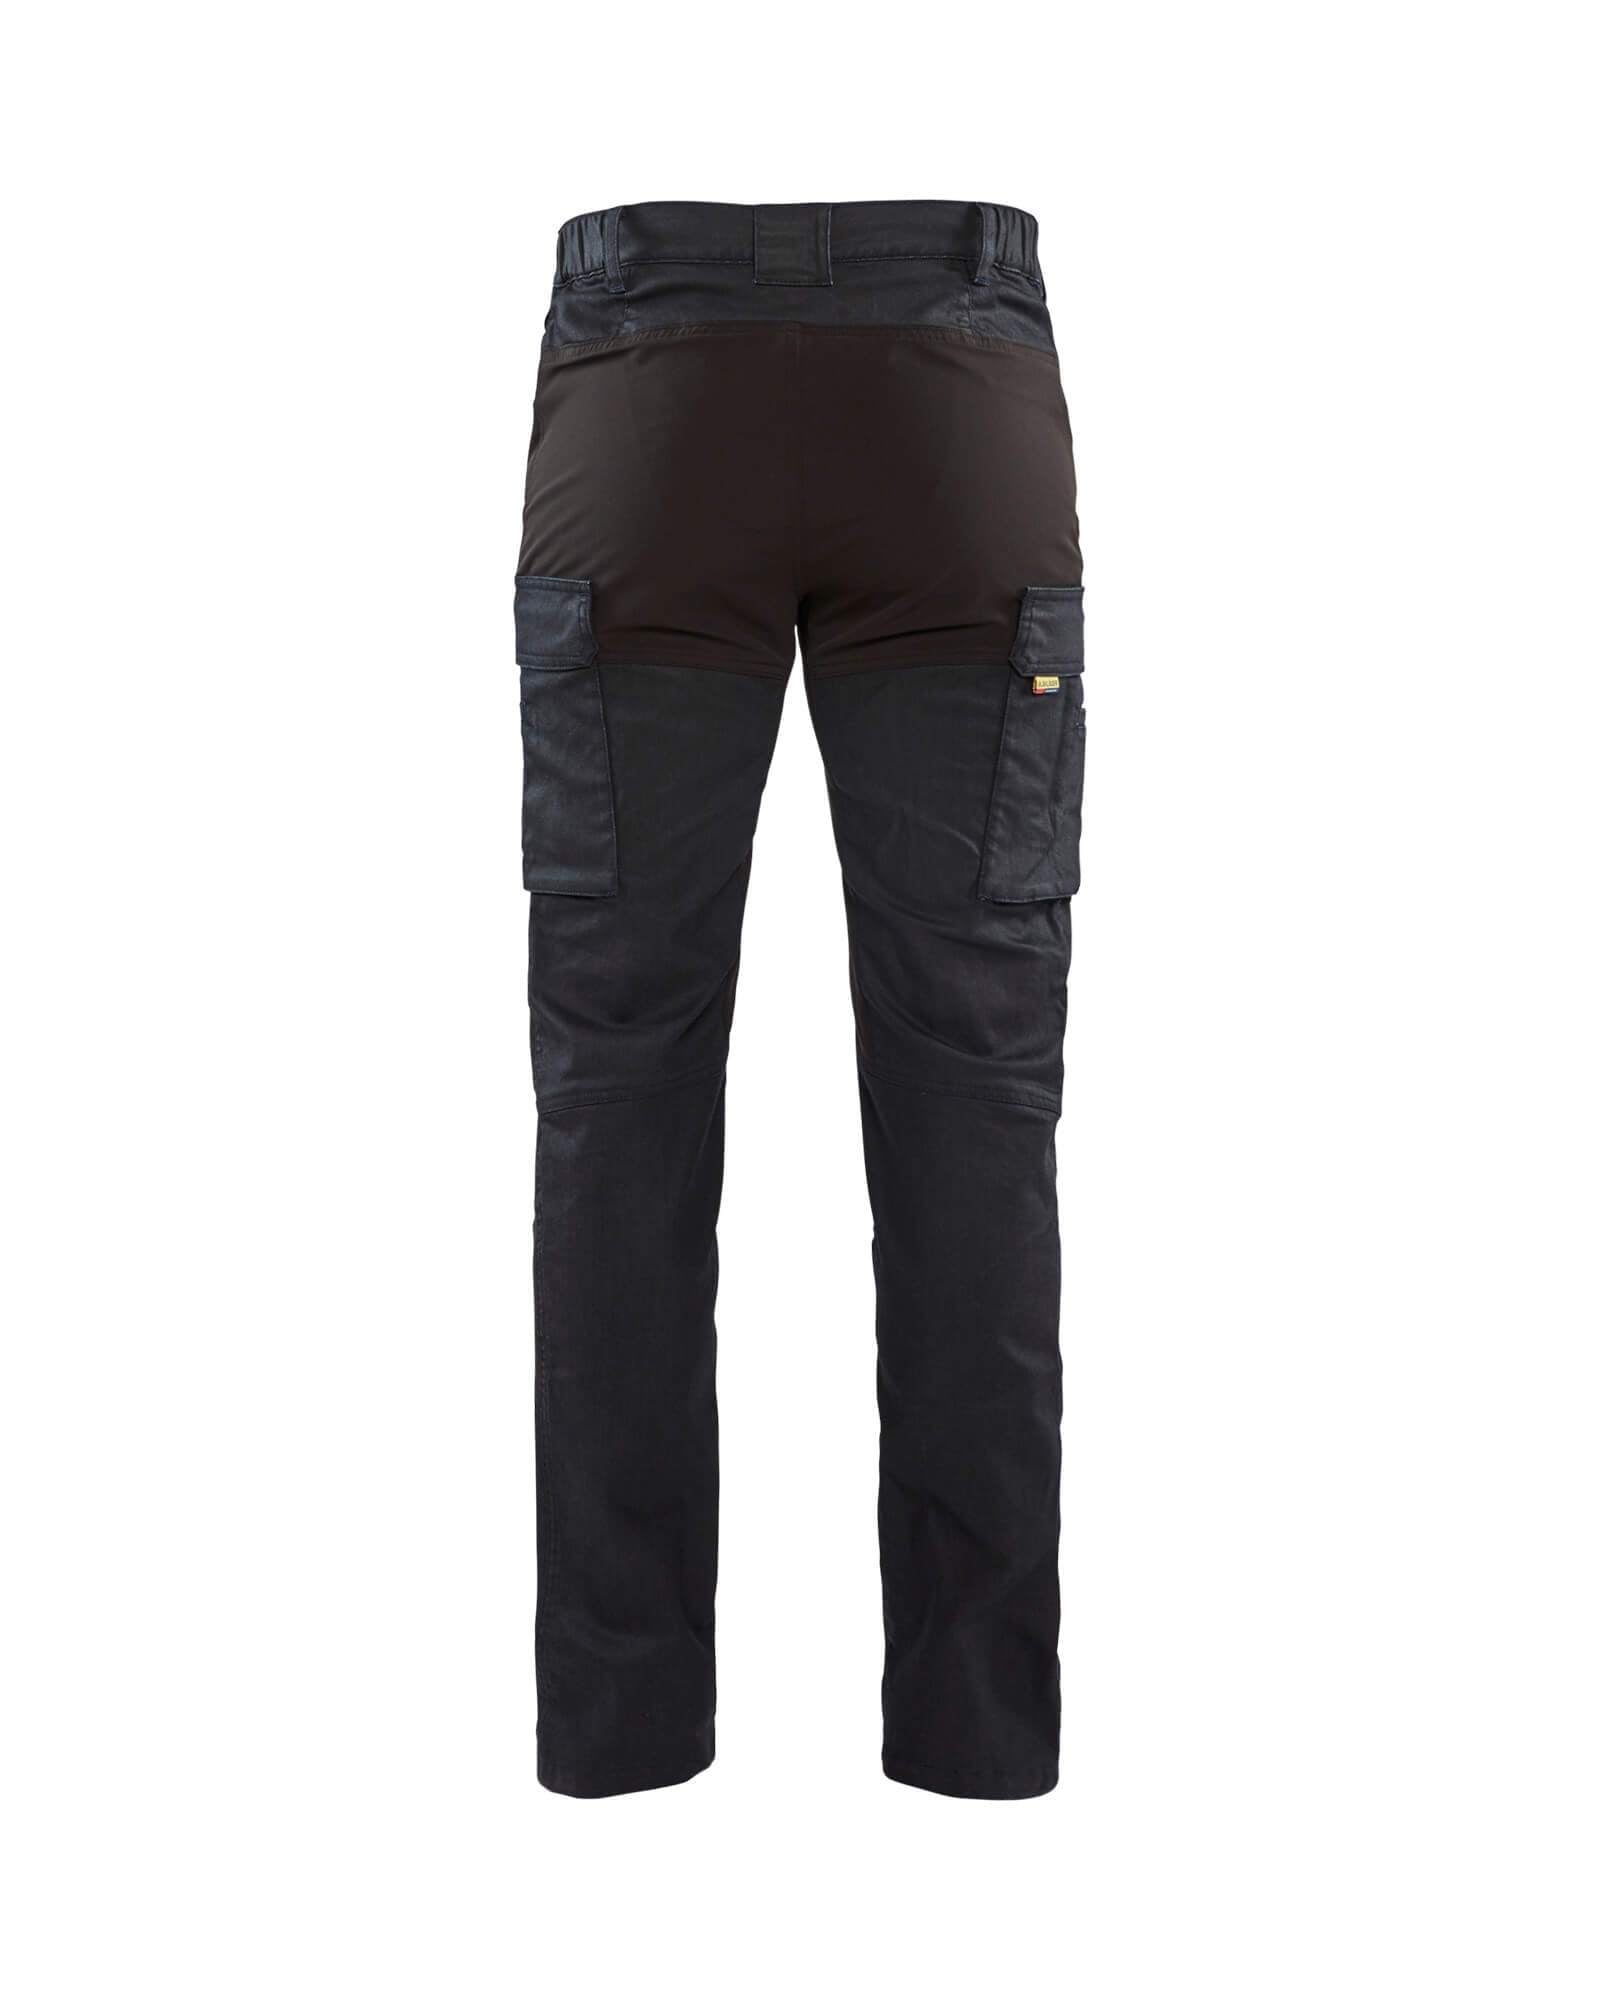 DeWalt Harrison Regular Fit Stretch Work Trousers - Black/Grey